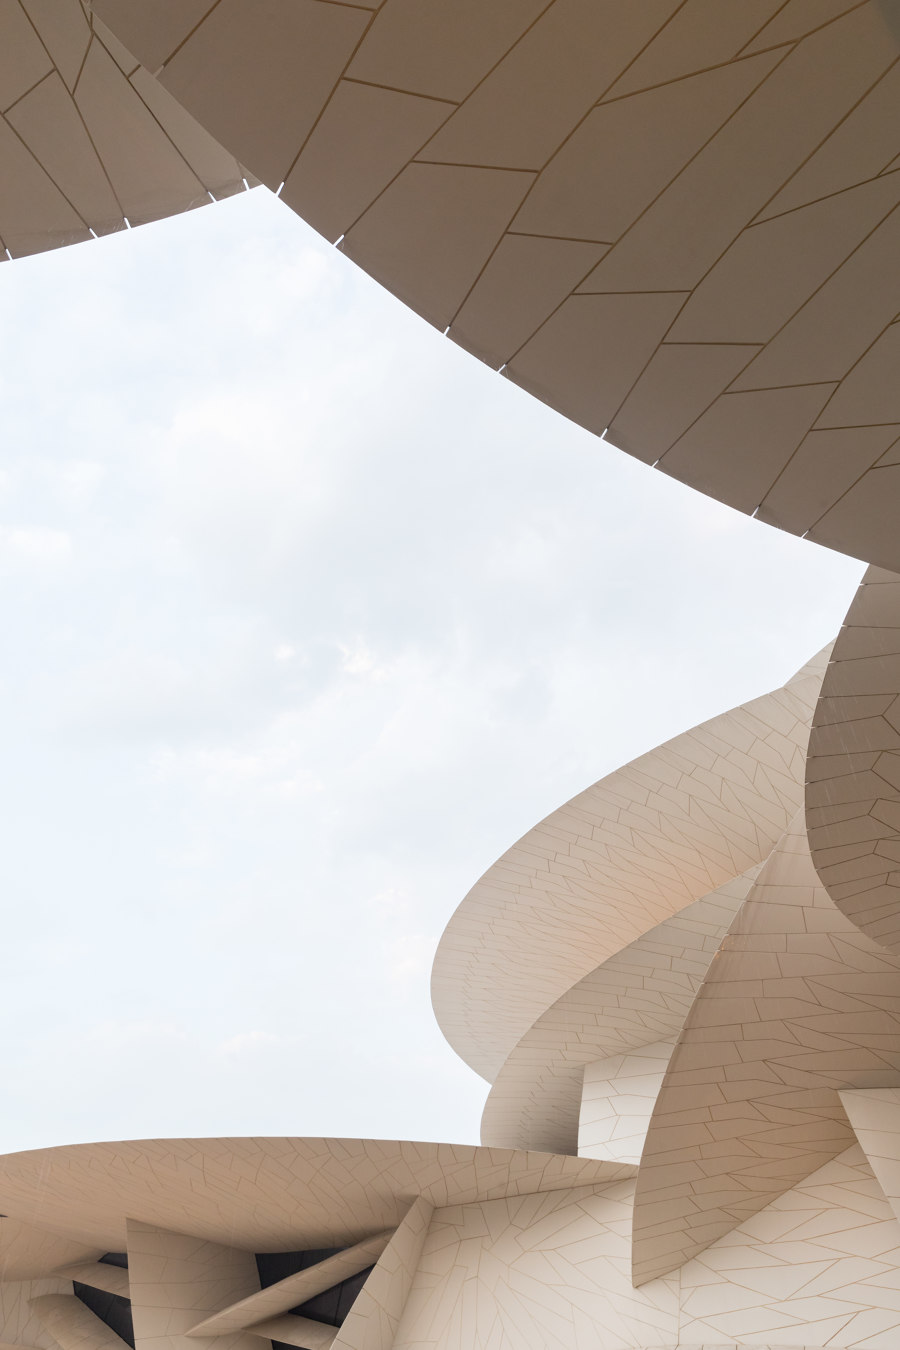 National Museum of Qatar von Ateliers Jean Nouvel | Museen